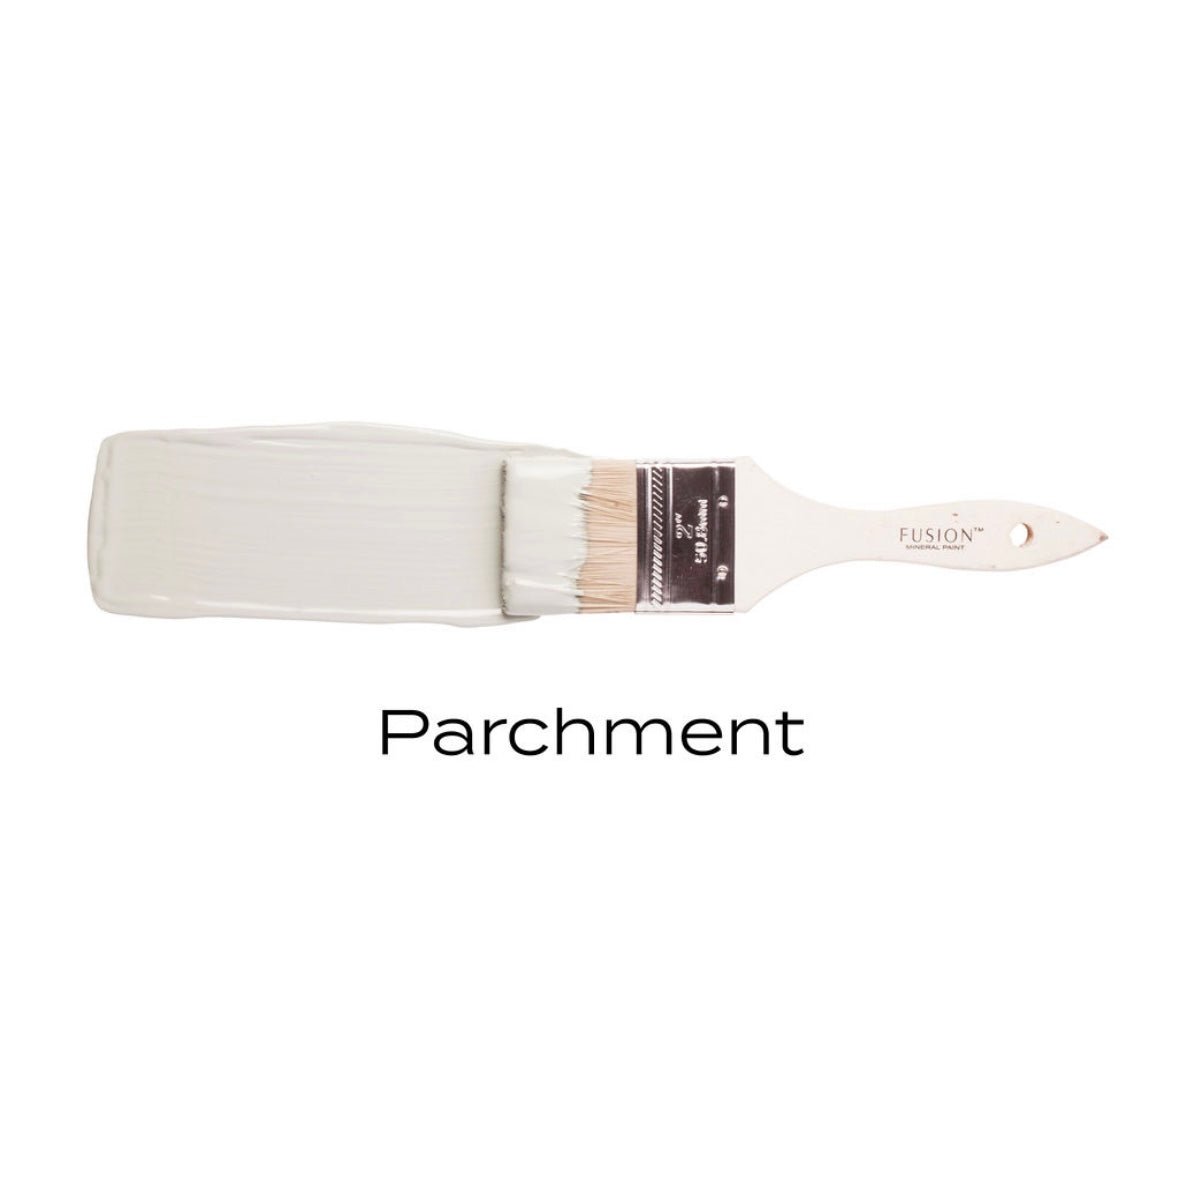 Parchment by Fusion